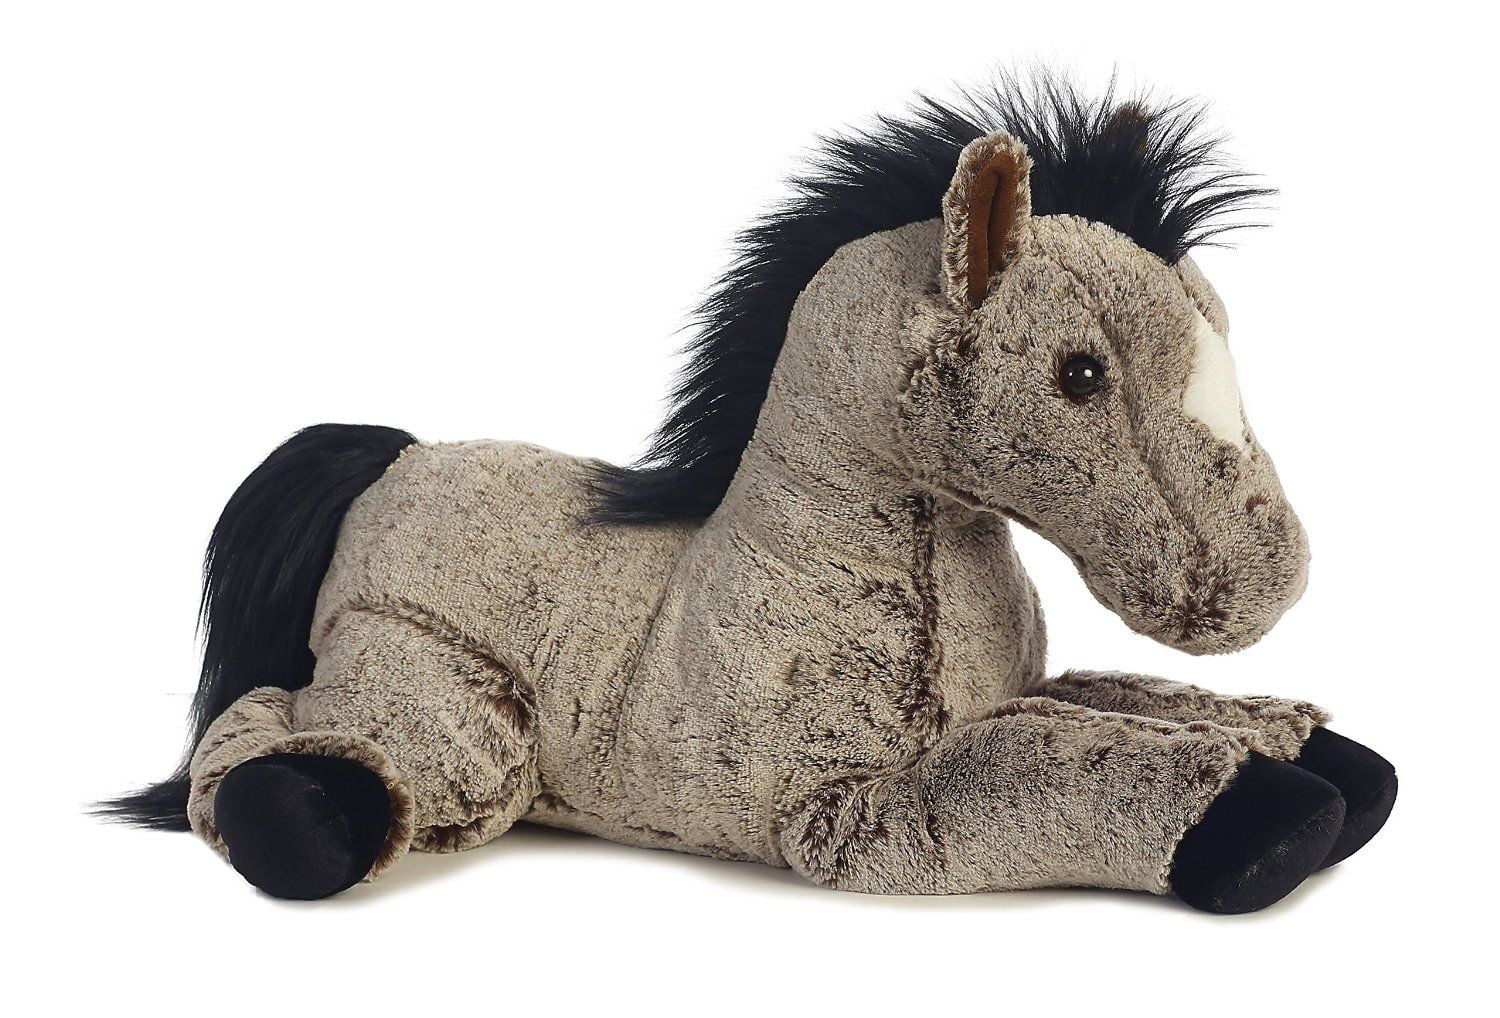 walmart stuffed horse